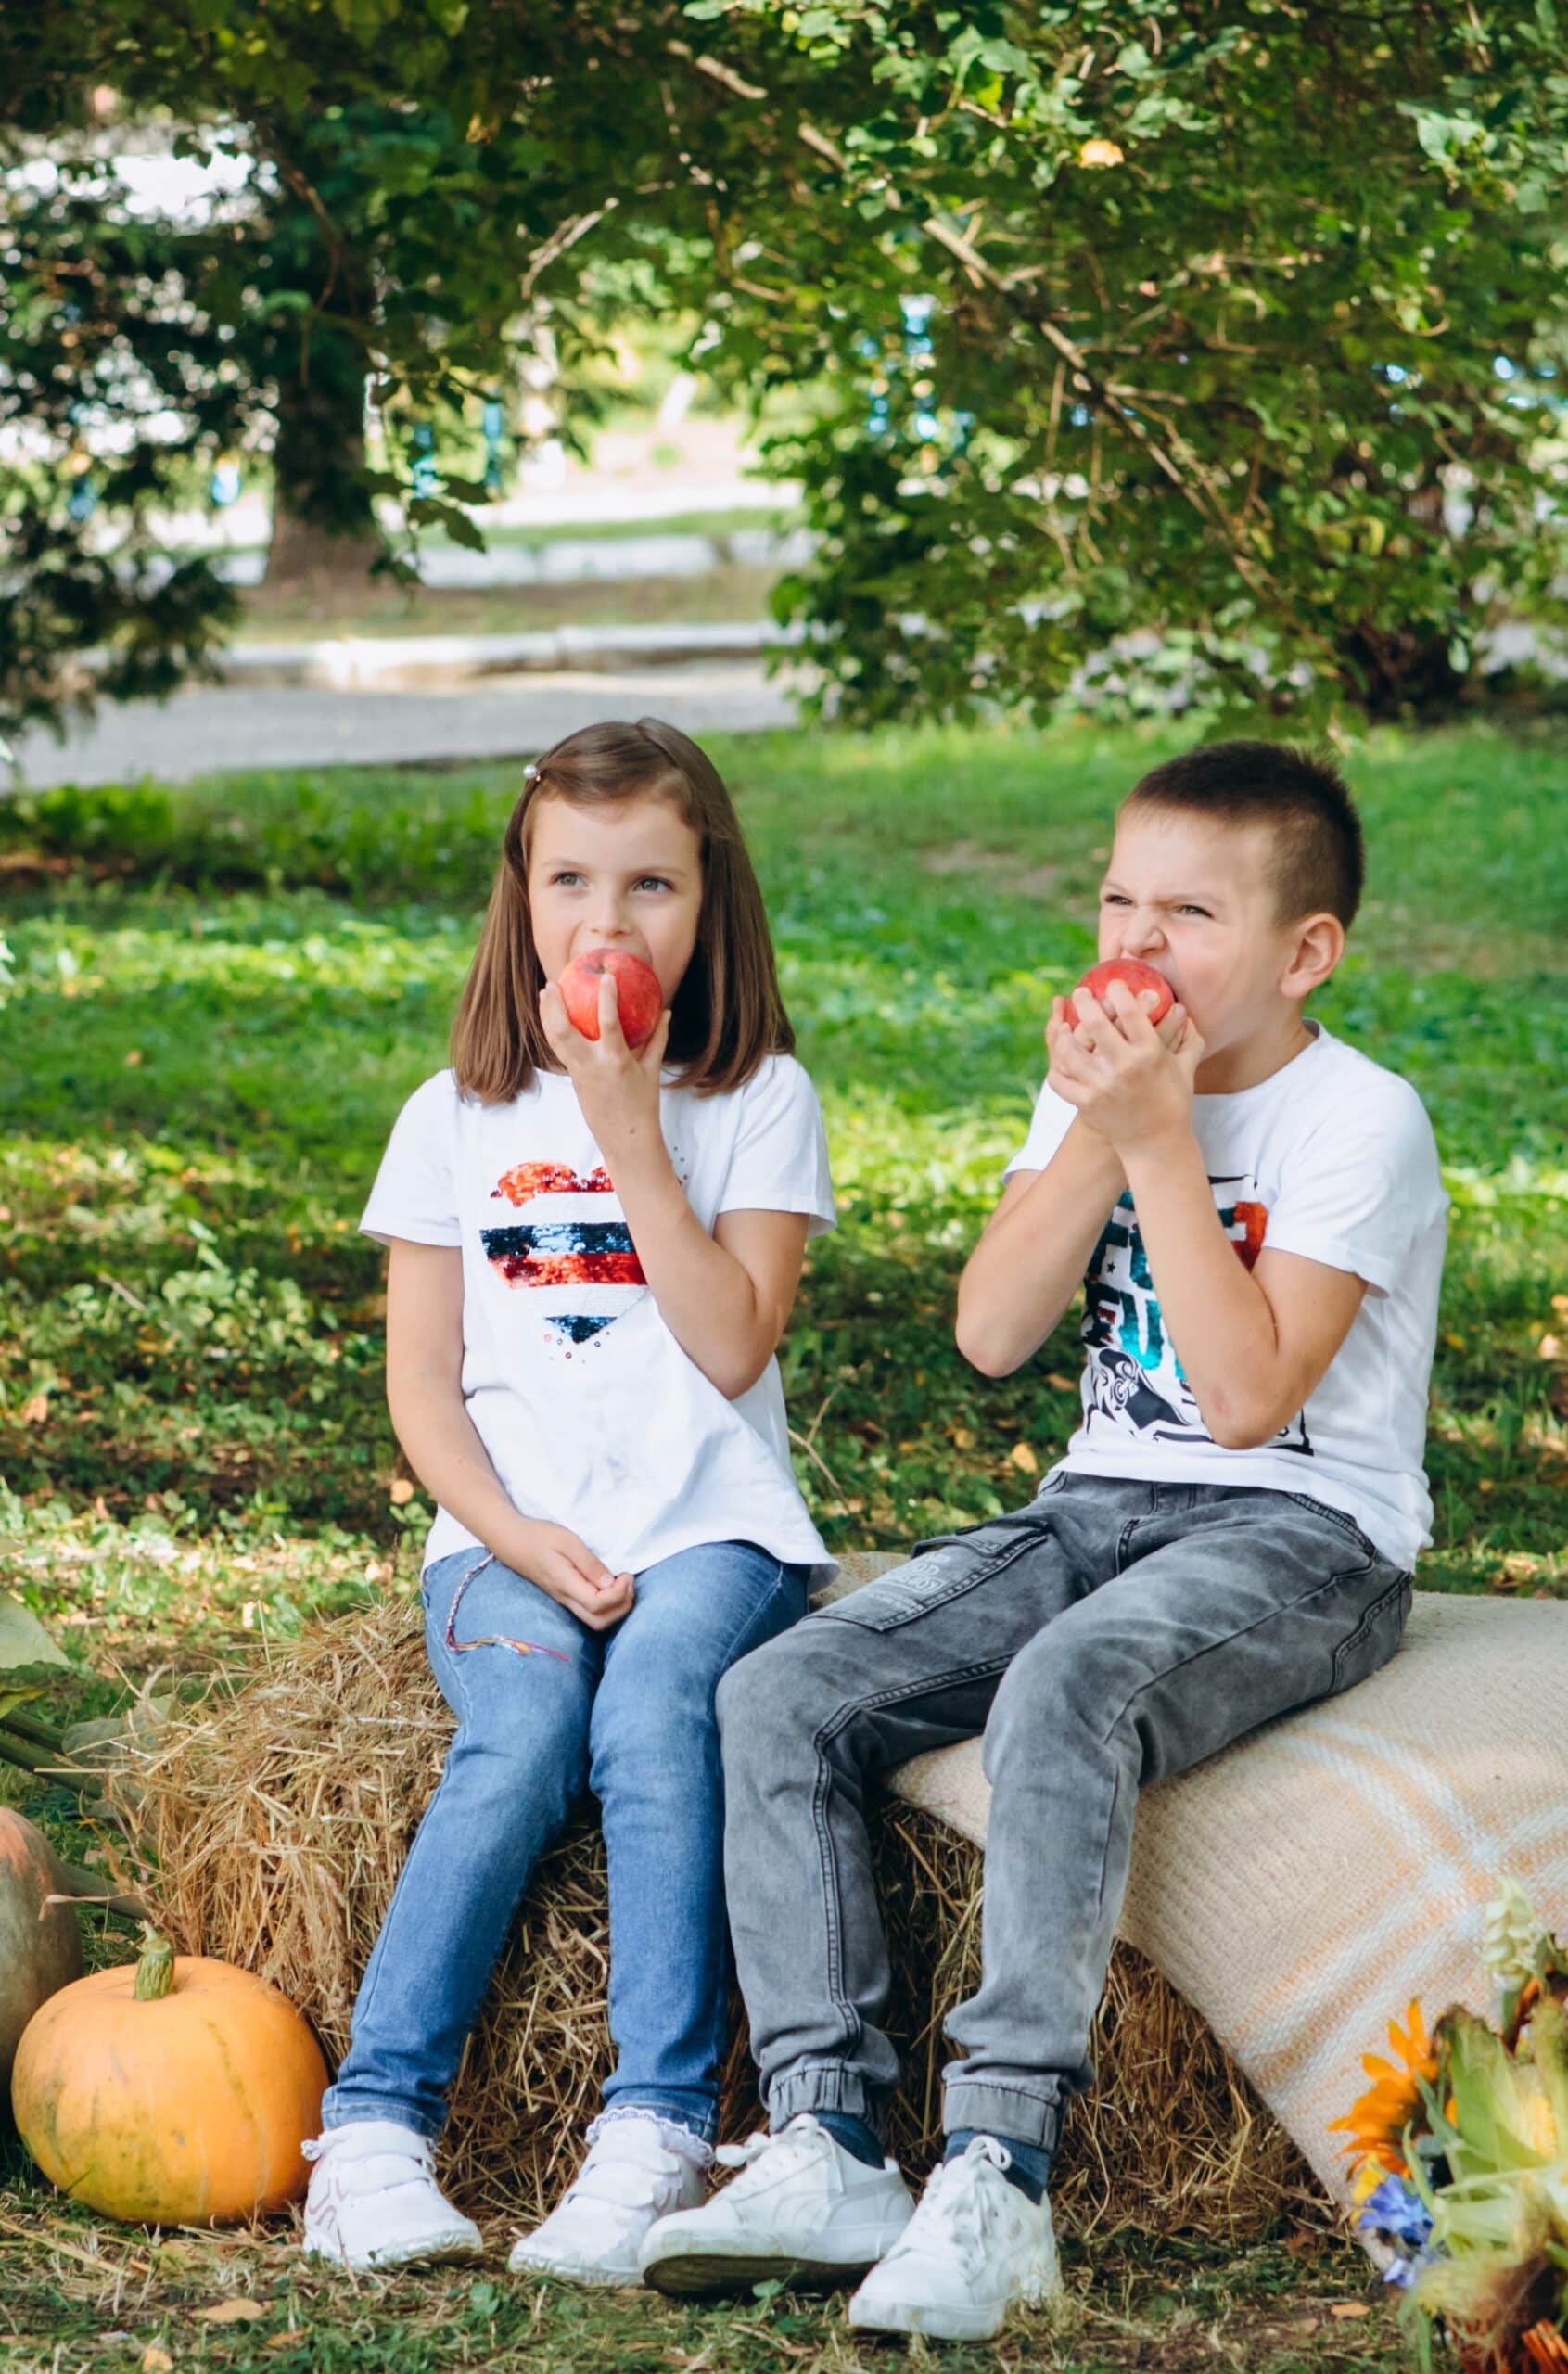 kids eating apples